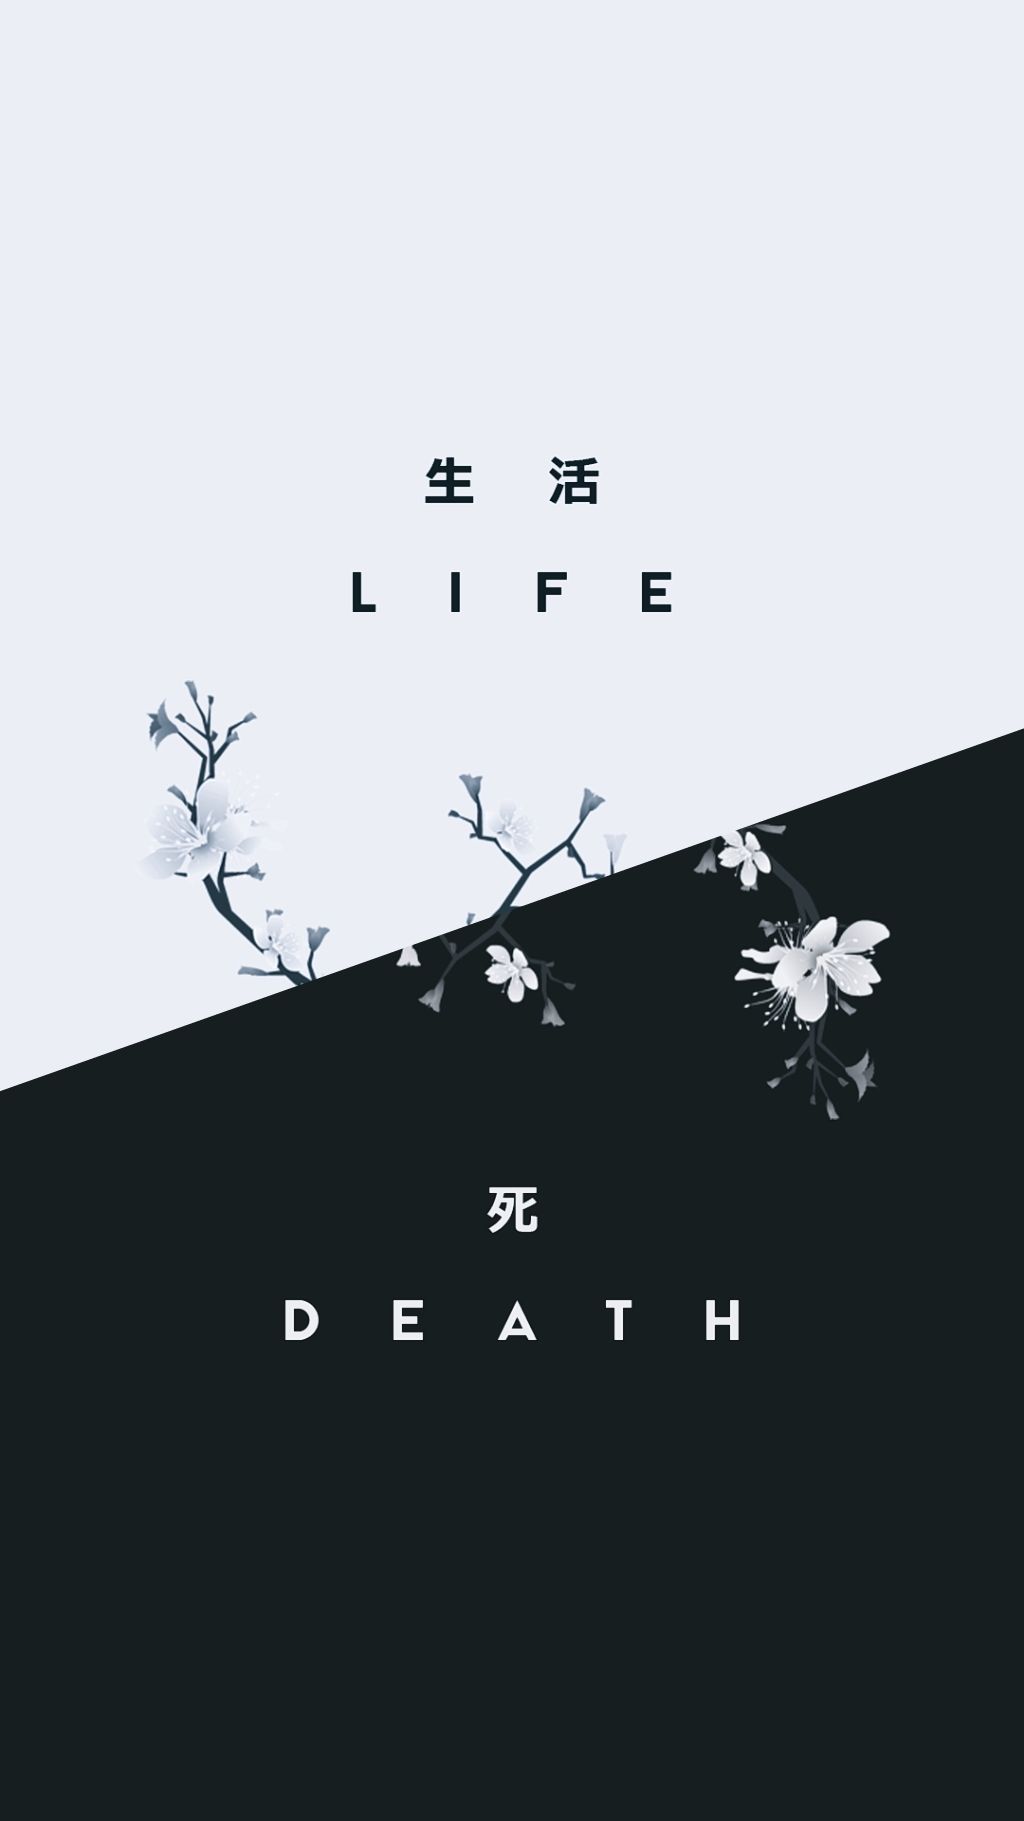 [37+] Live Death Wallpaper on WallpaperSafari